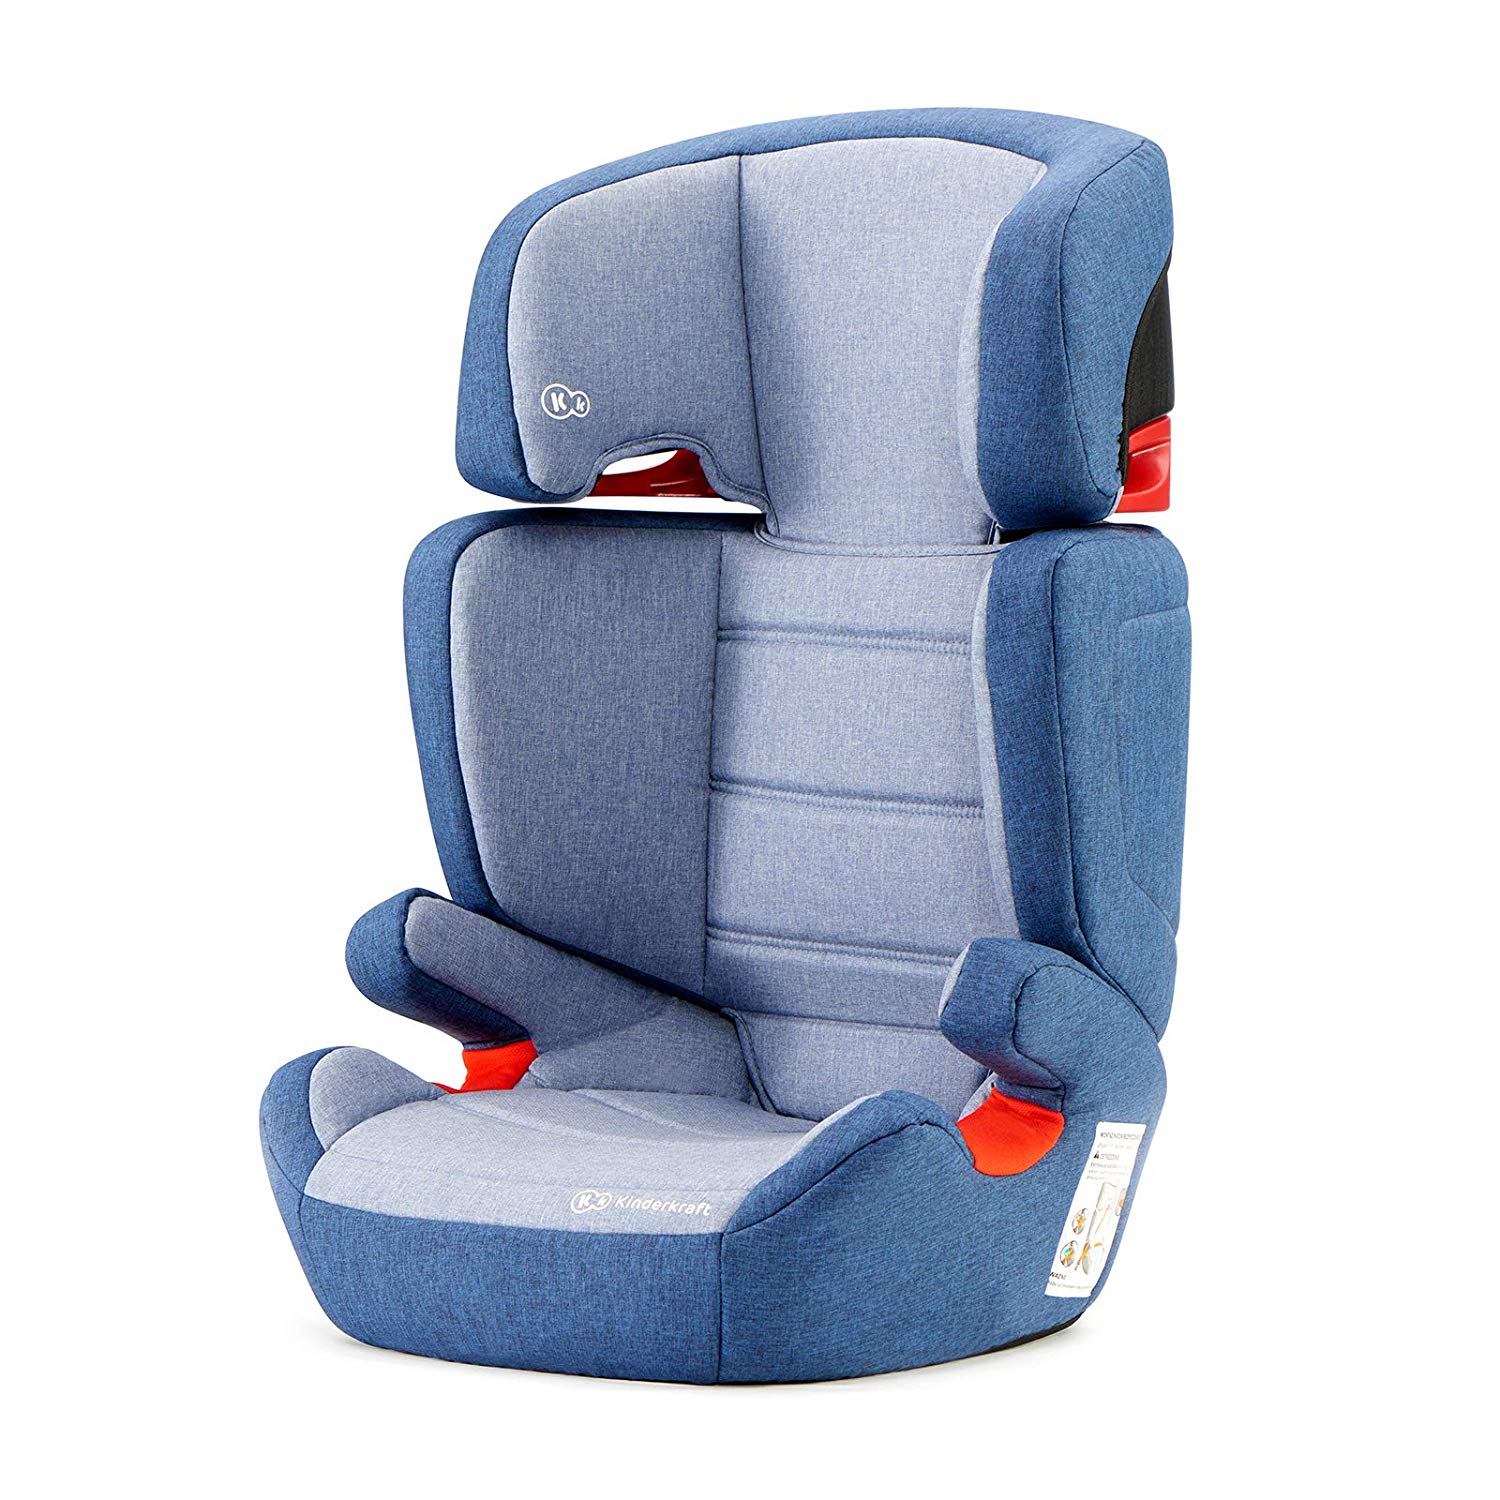 Kinderkraft Juniorfix Child Car Seat, Child Car Seat, Child Seat with Isofix, Group 2/3 15-36 kg, Adjustable Backrest and Headrest, ECE R44/04, Black